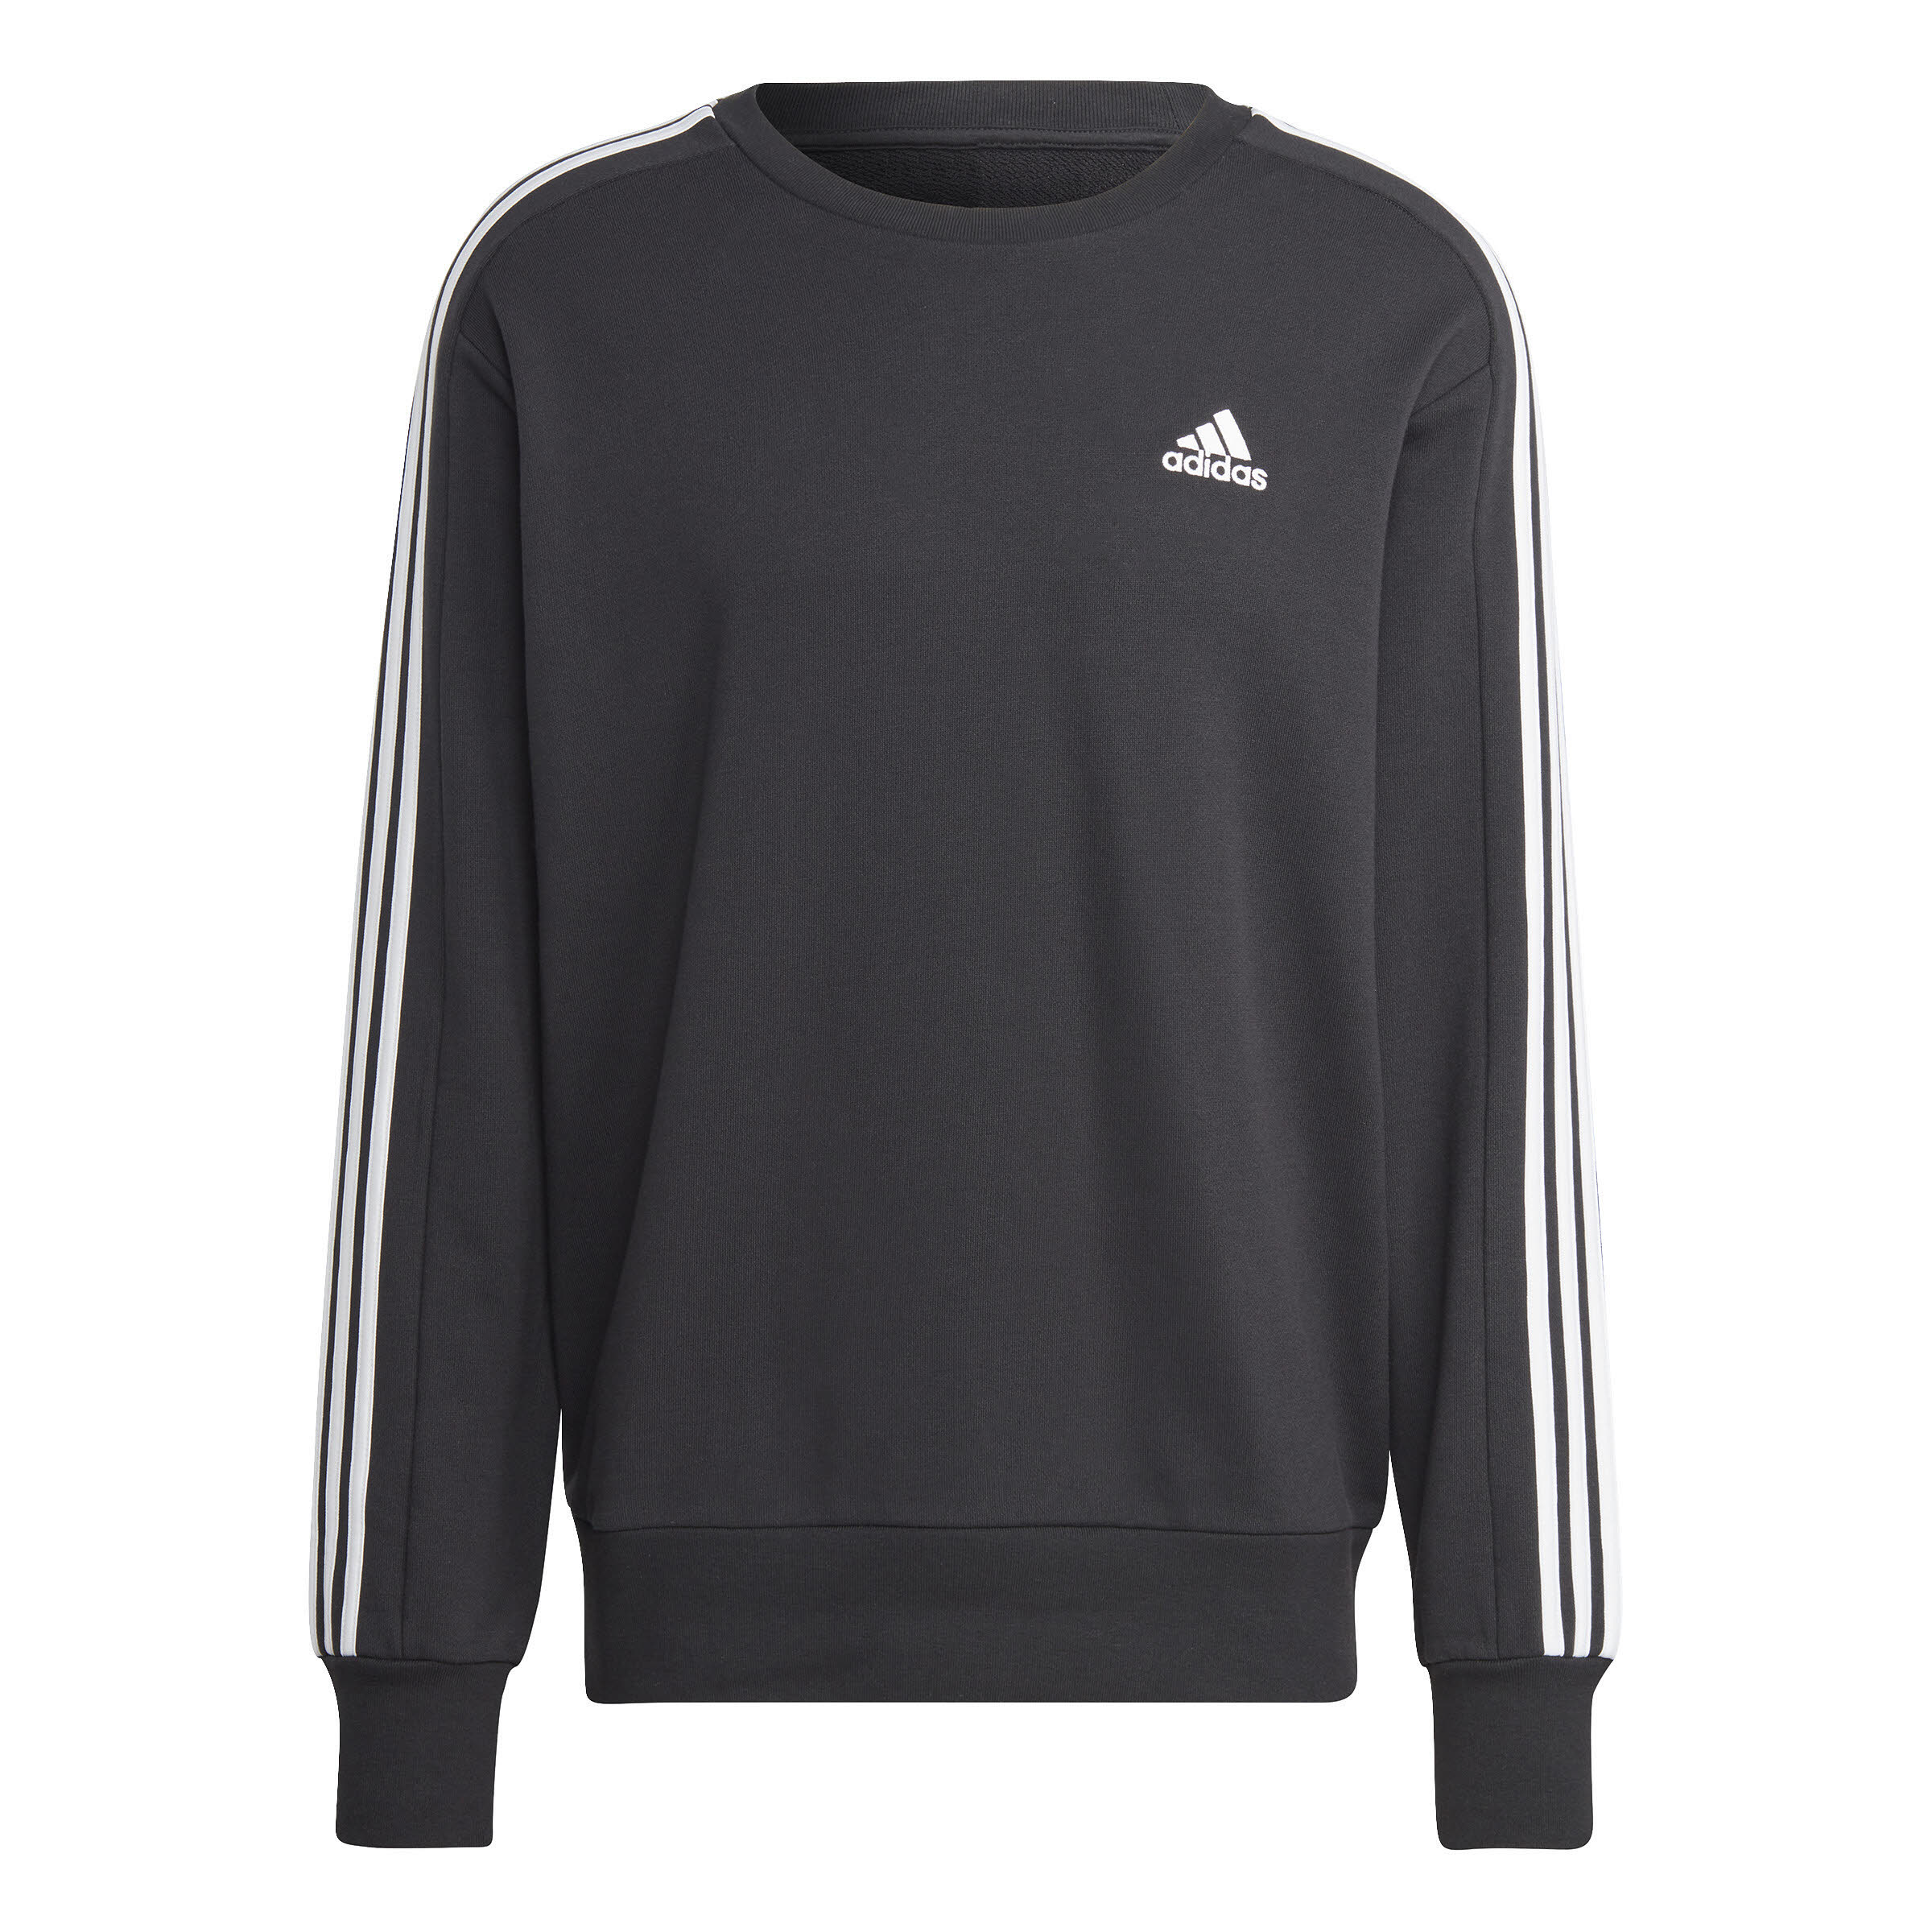 adidas 3S FT SWT Herren Sweatshirt Pullover Sweat-Pulli grau